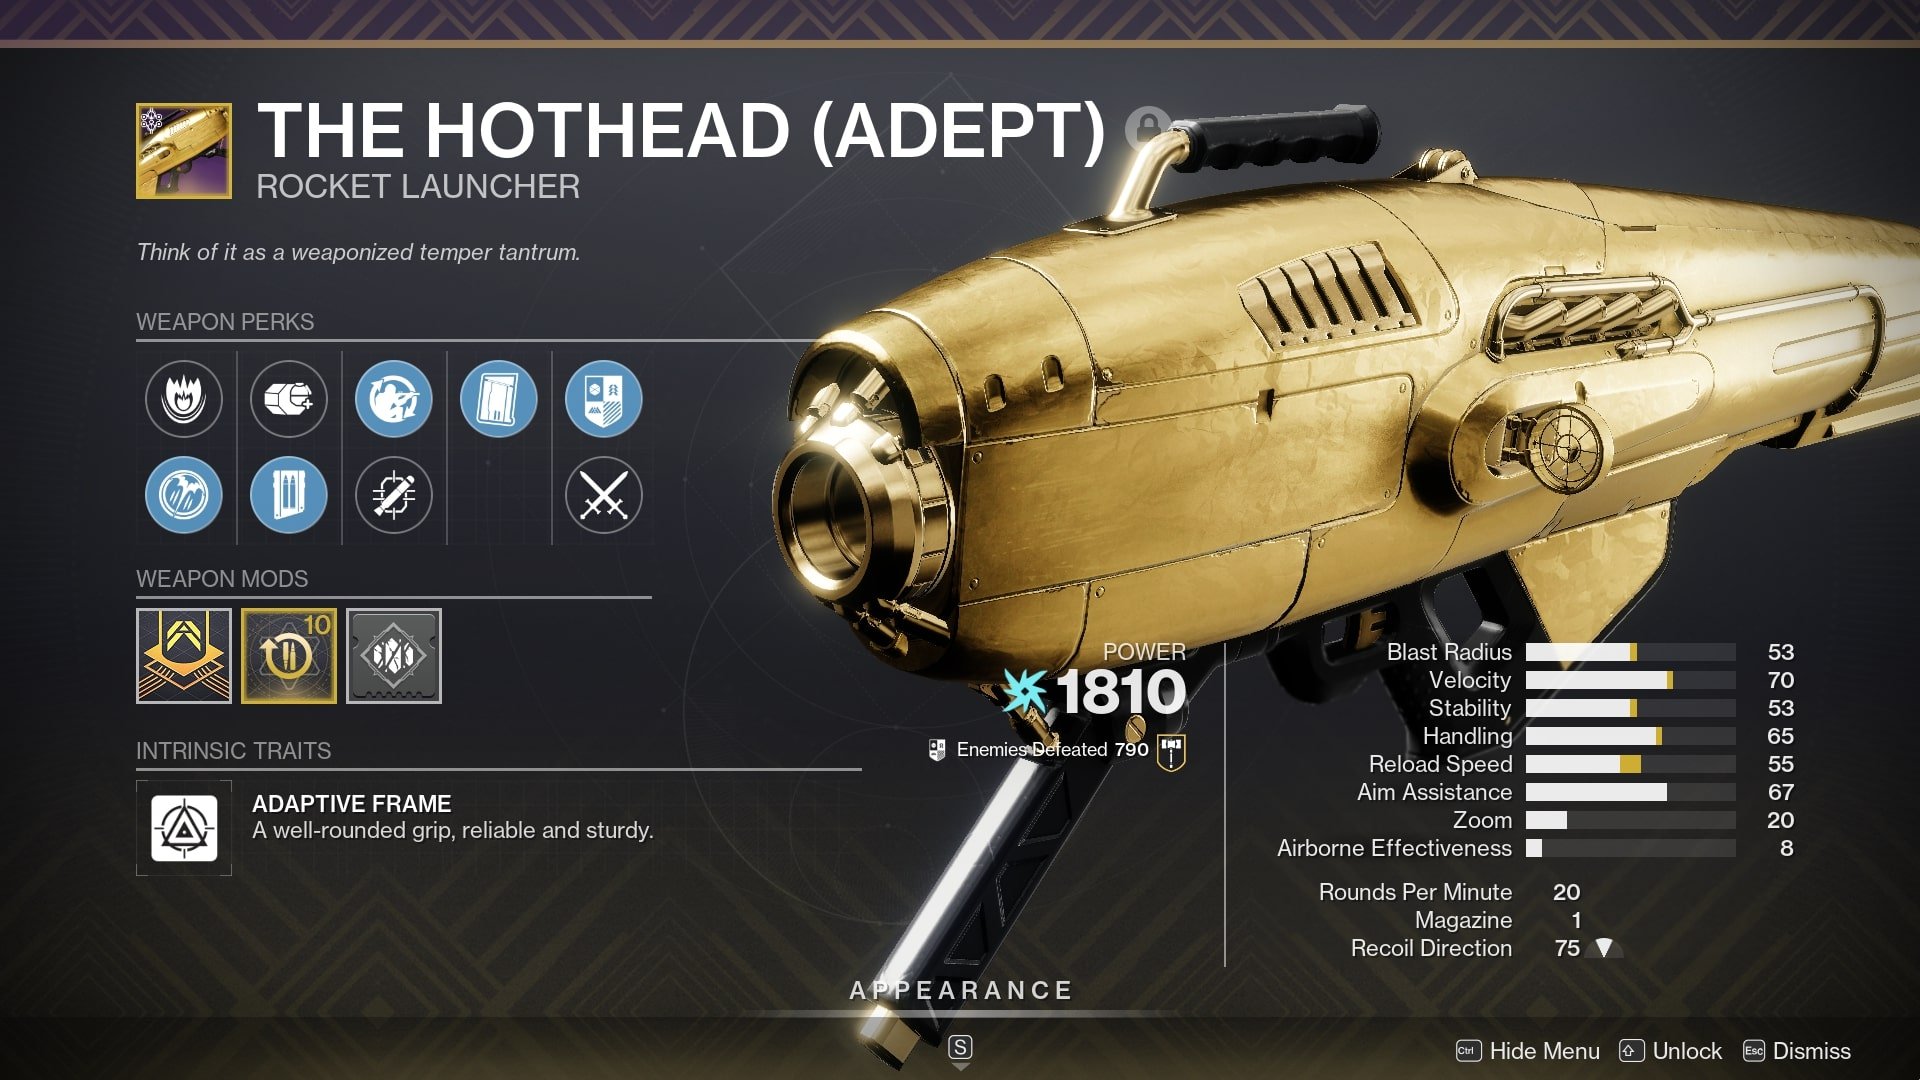 The Hothead Adept